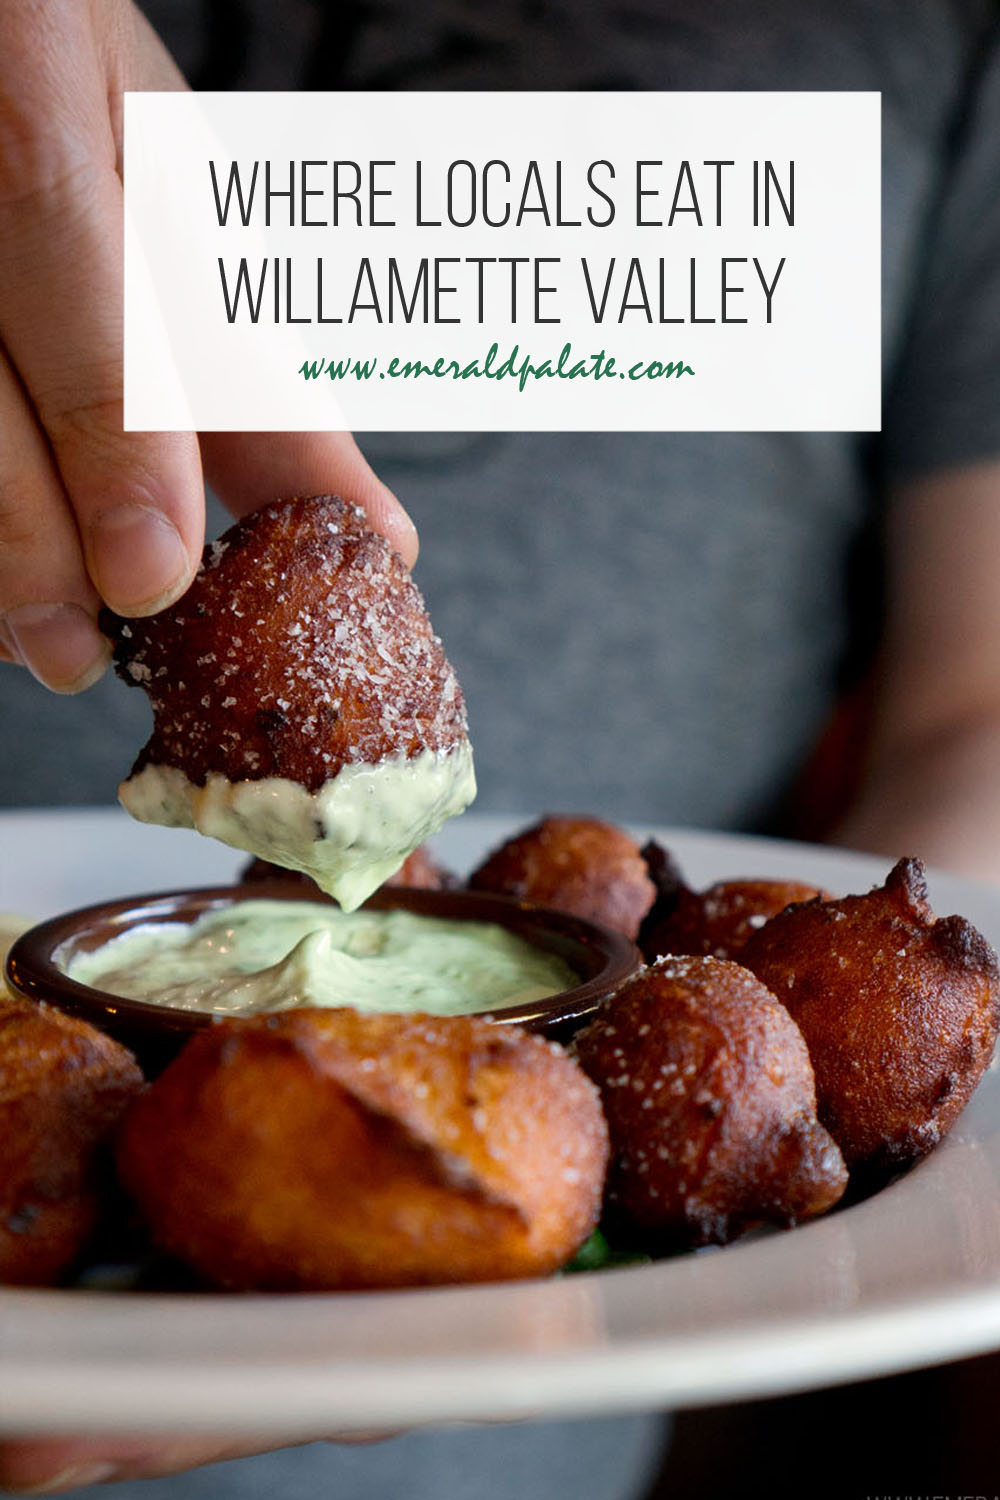 Best restaurants in Willamette Valley. Find where locals eat in Oregon Wine Country between wine tastings.